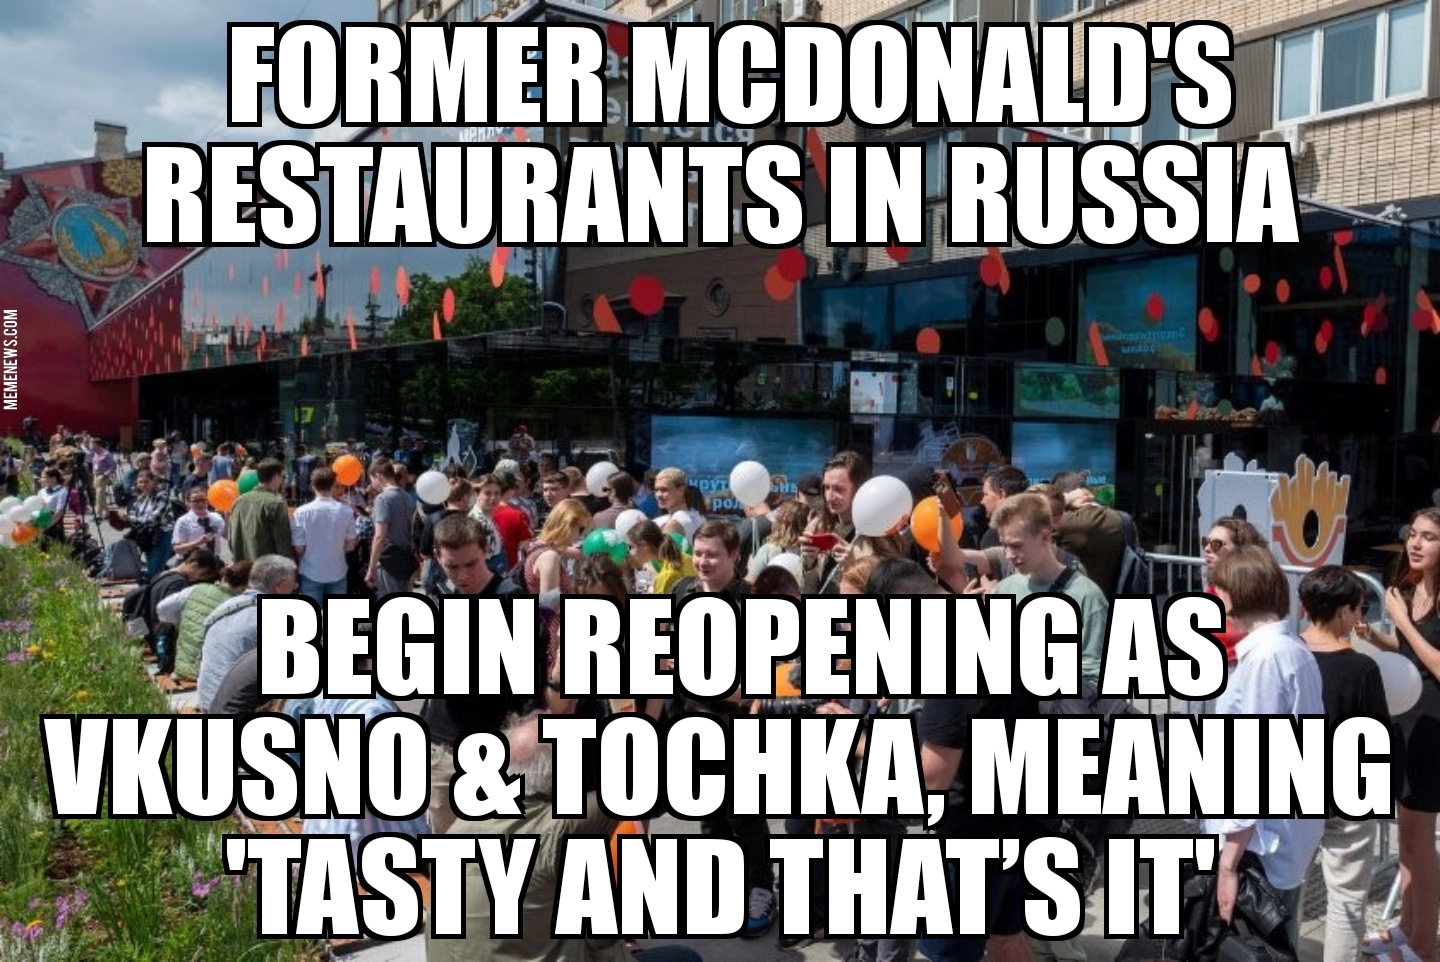 Former Russia McDonald’s reopen